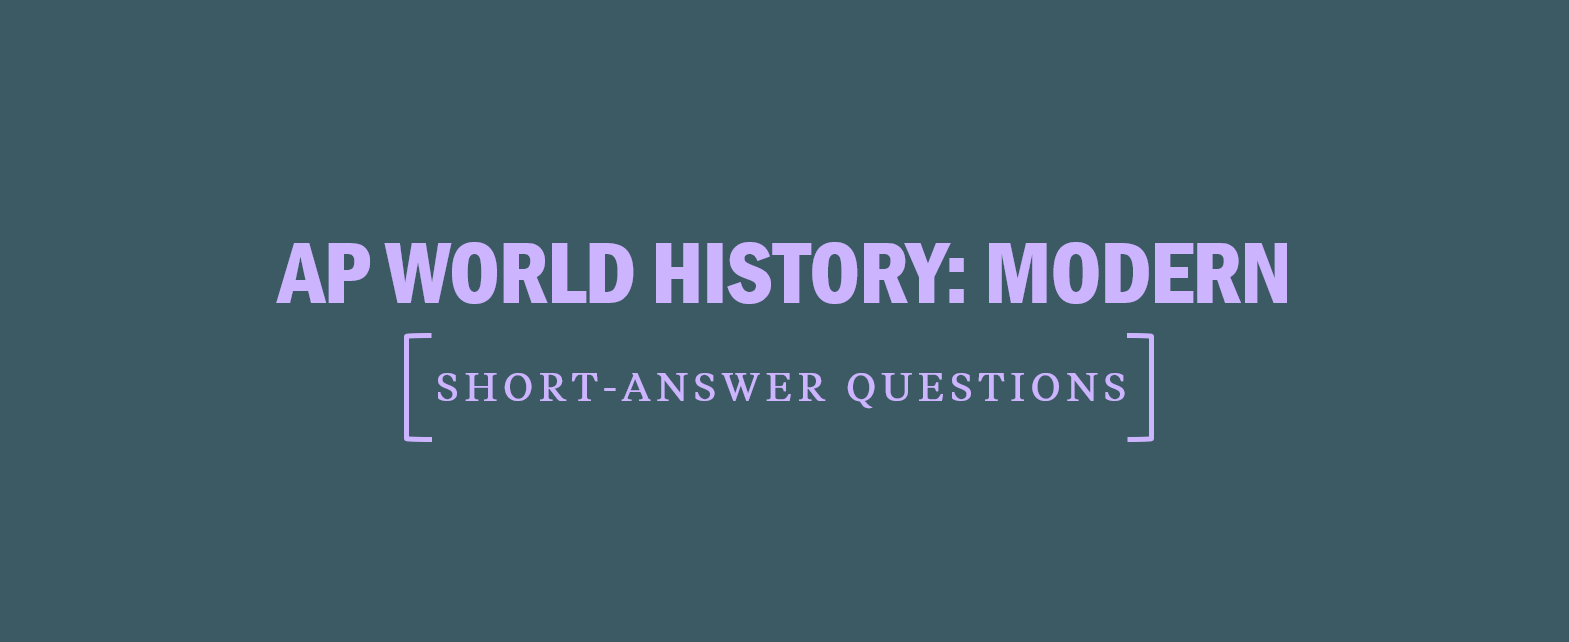 AP World History: Modern Short-Answer Questions